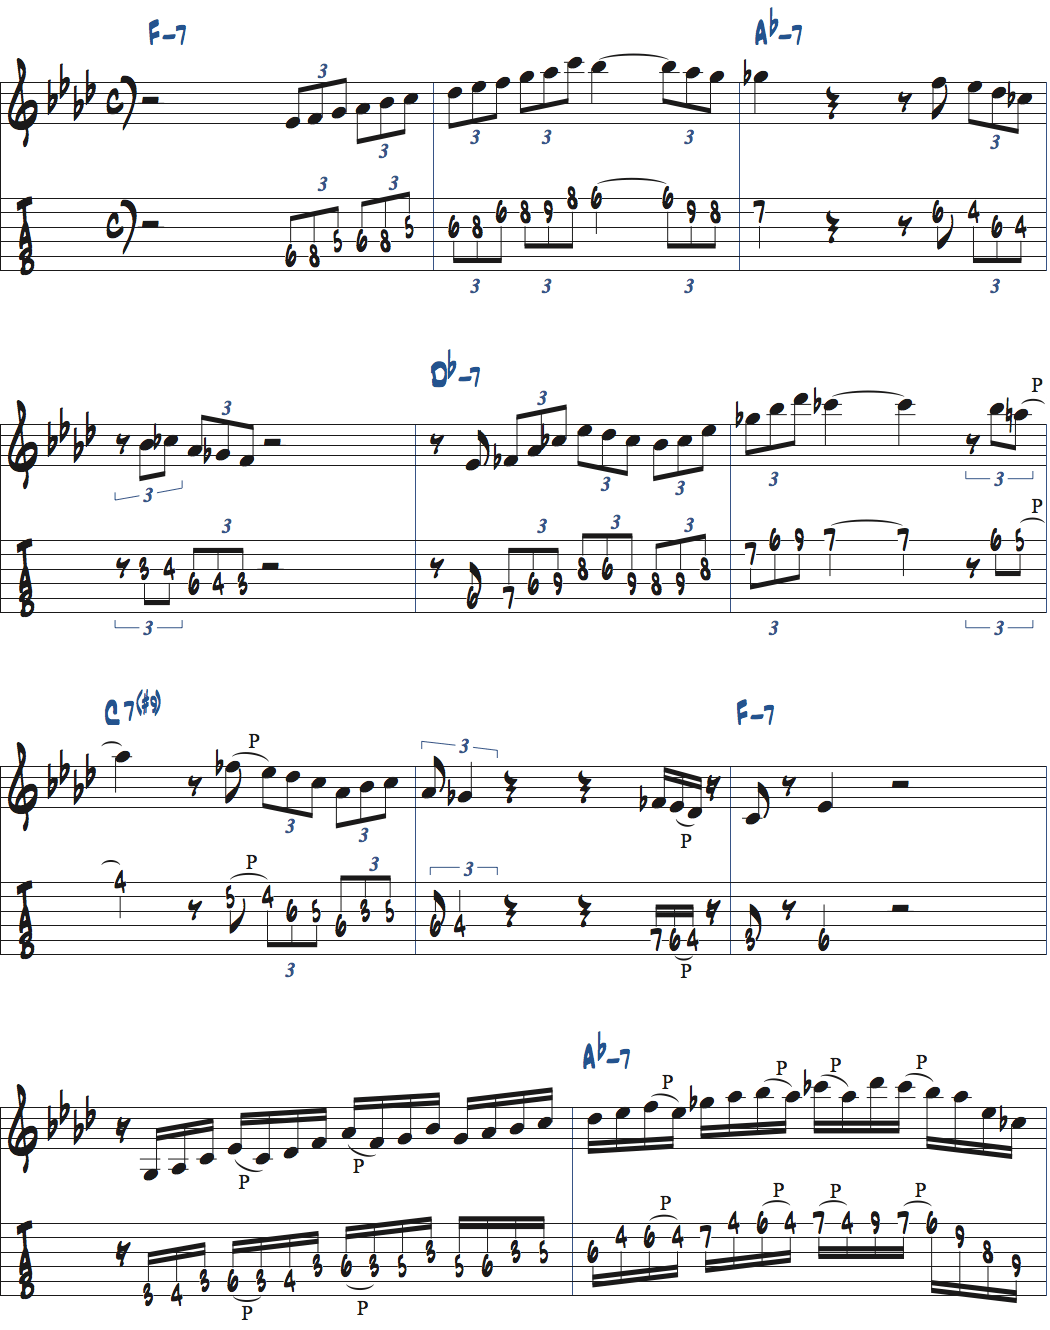 Fm9-Abm9-Dbm9-C7(#9)でのアドリブ例楽譜ページ1